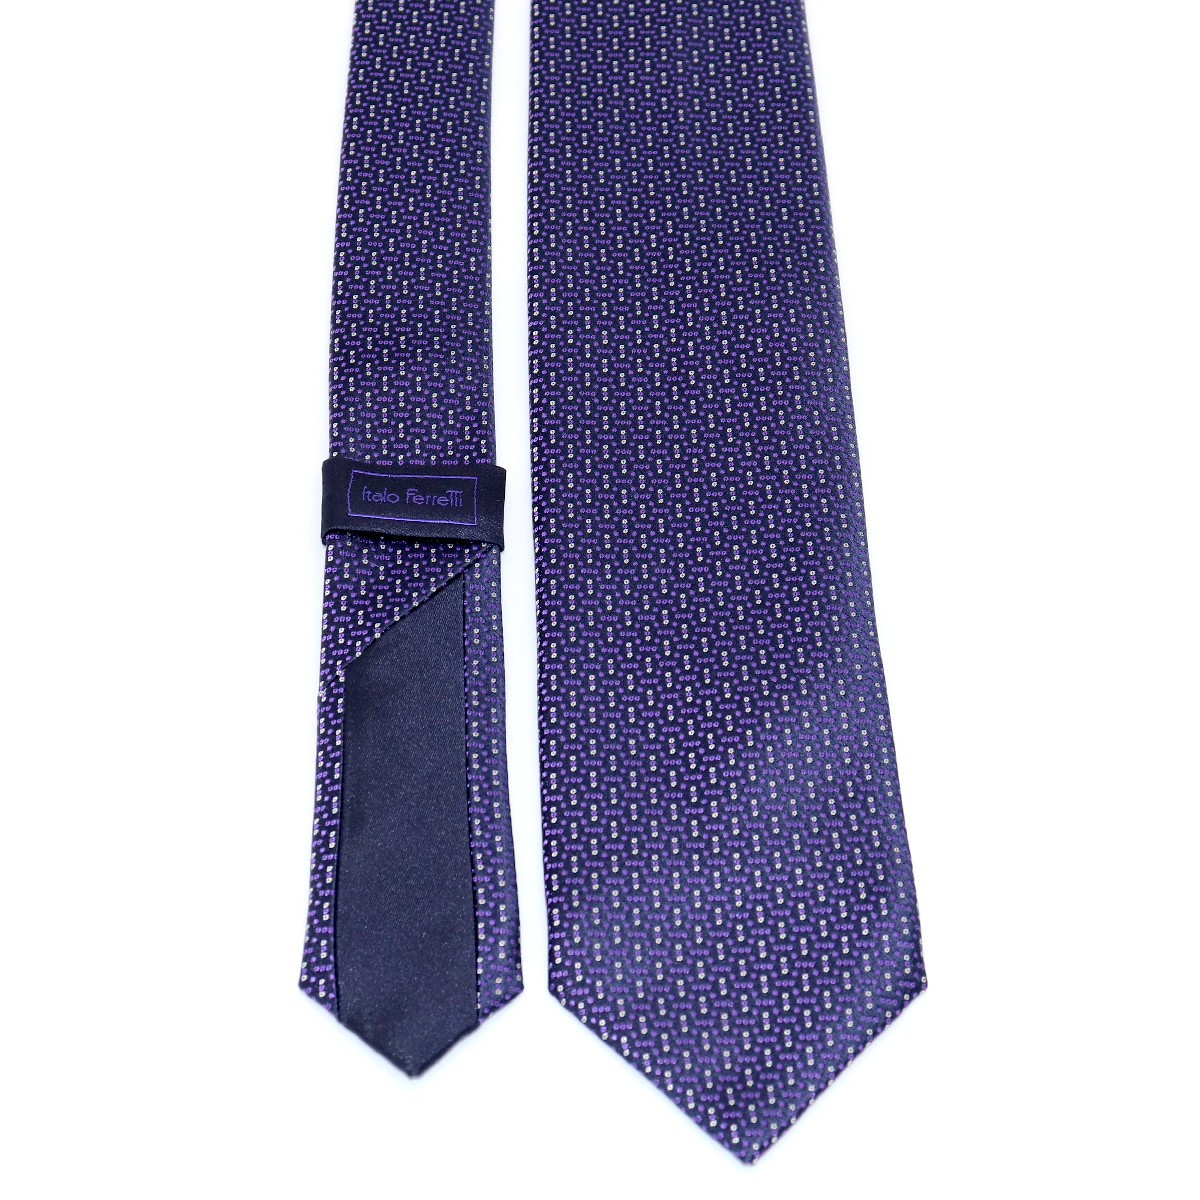 Refined custom silk tie, navy blue and purple micropattern, handmade in ...